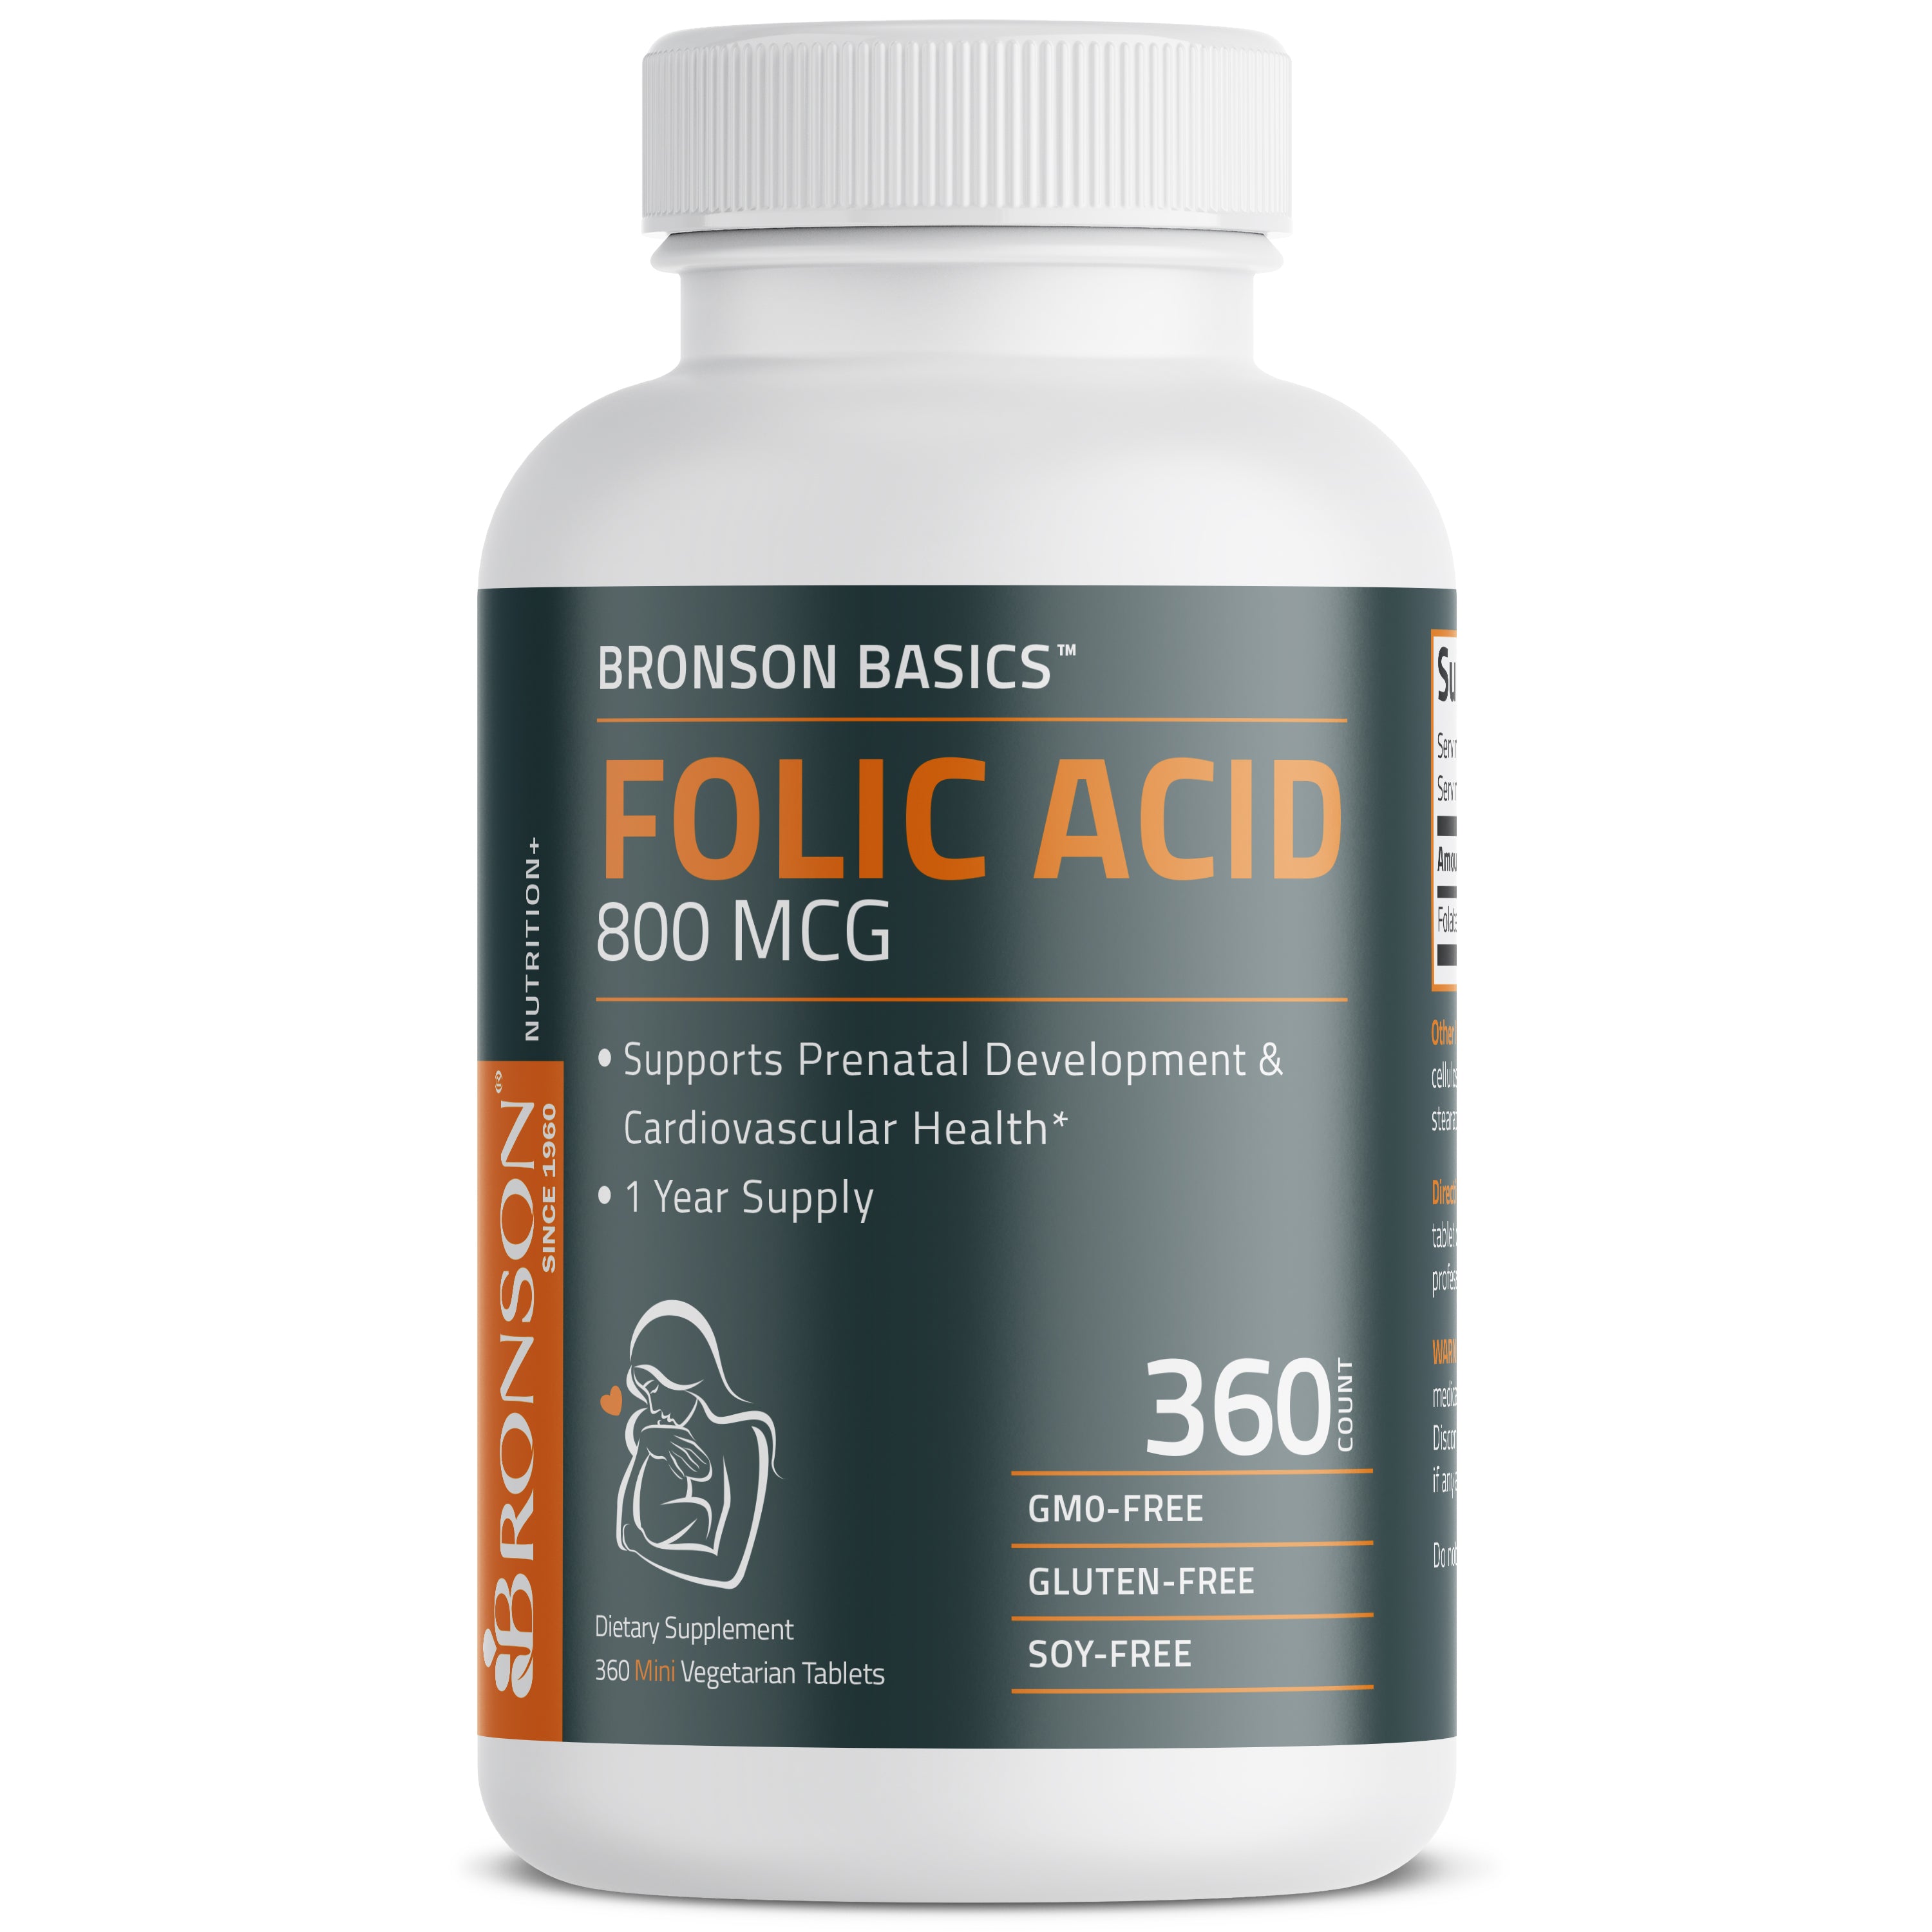 Folic Acid 800 MCG, 360 Tablets view 3 of 6